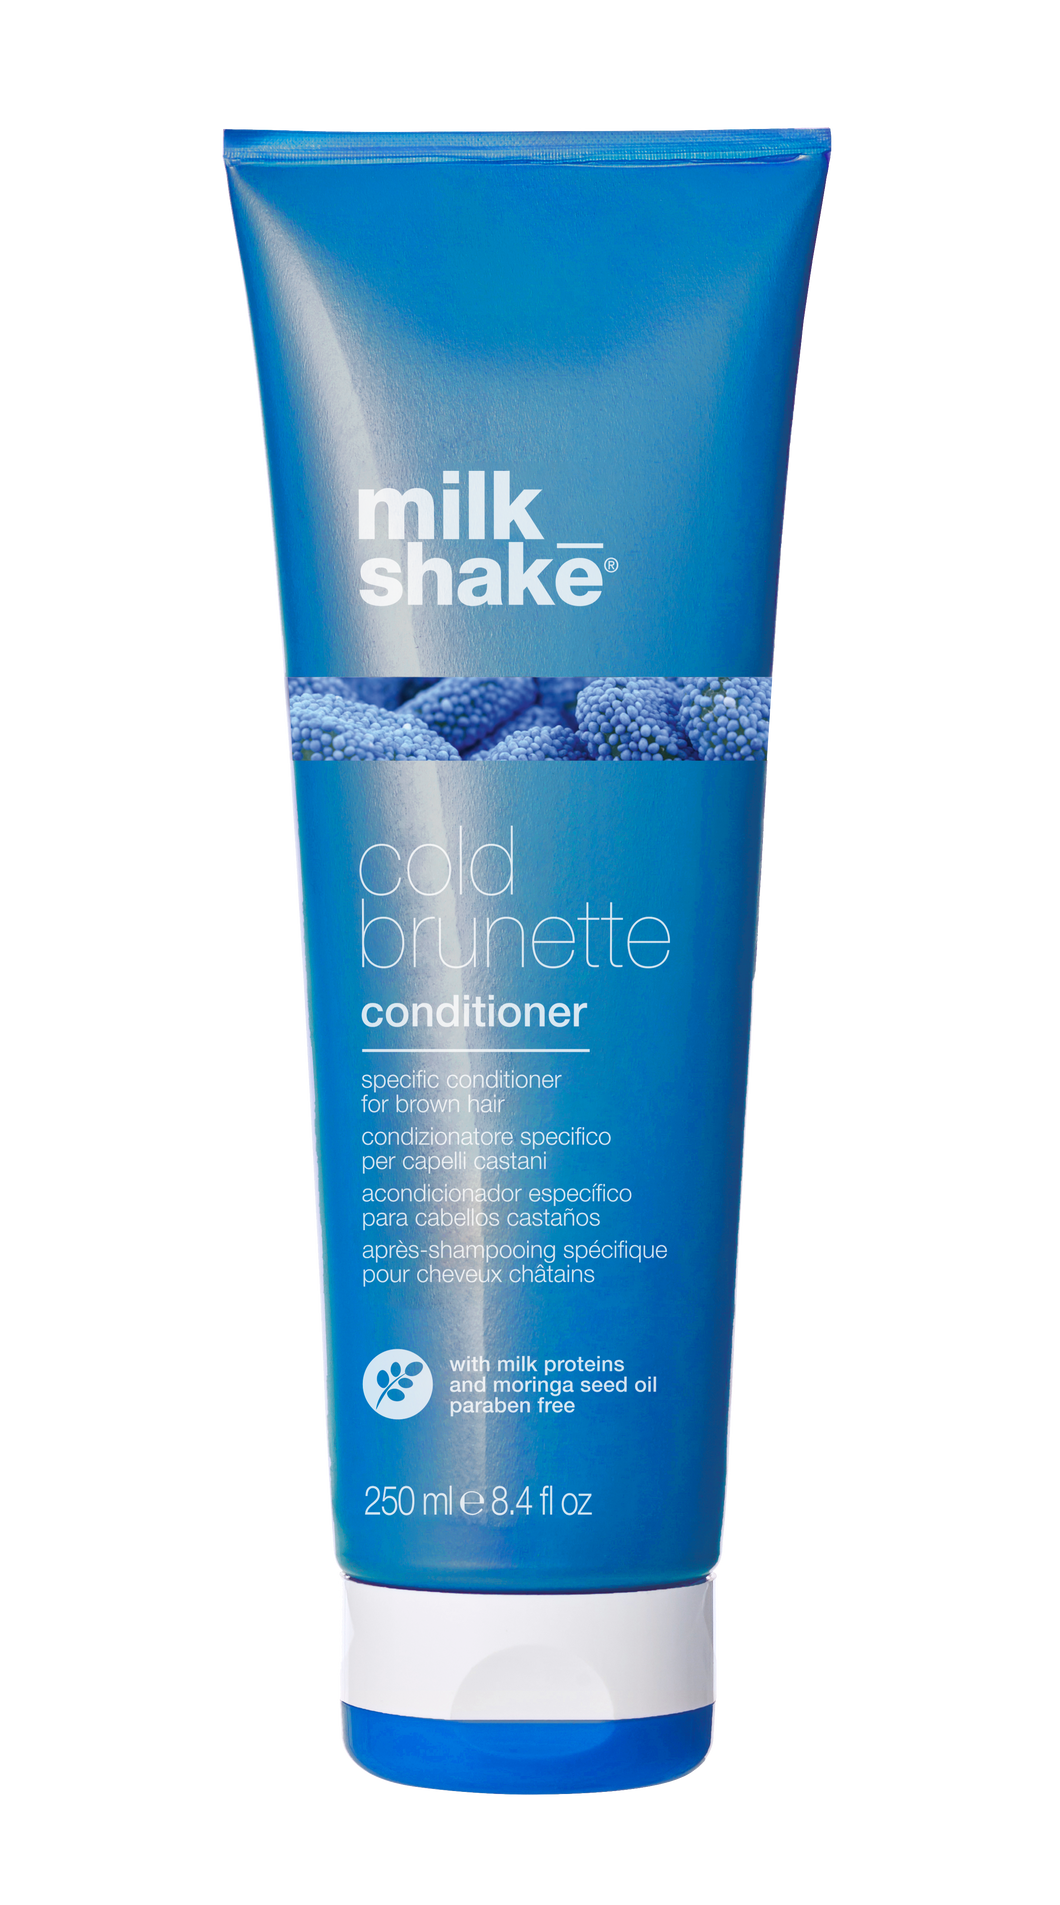 milk_shake cold brunette conditioner 250ml